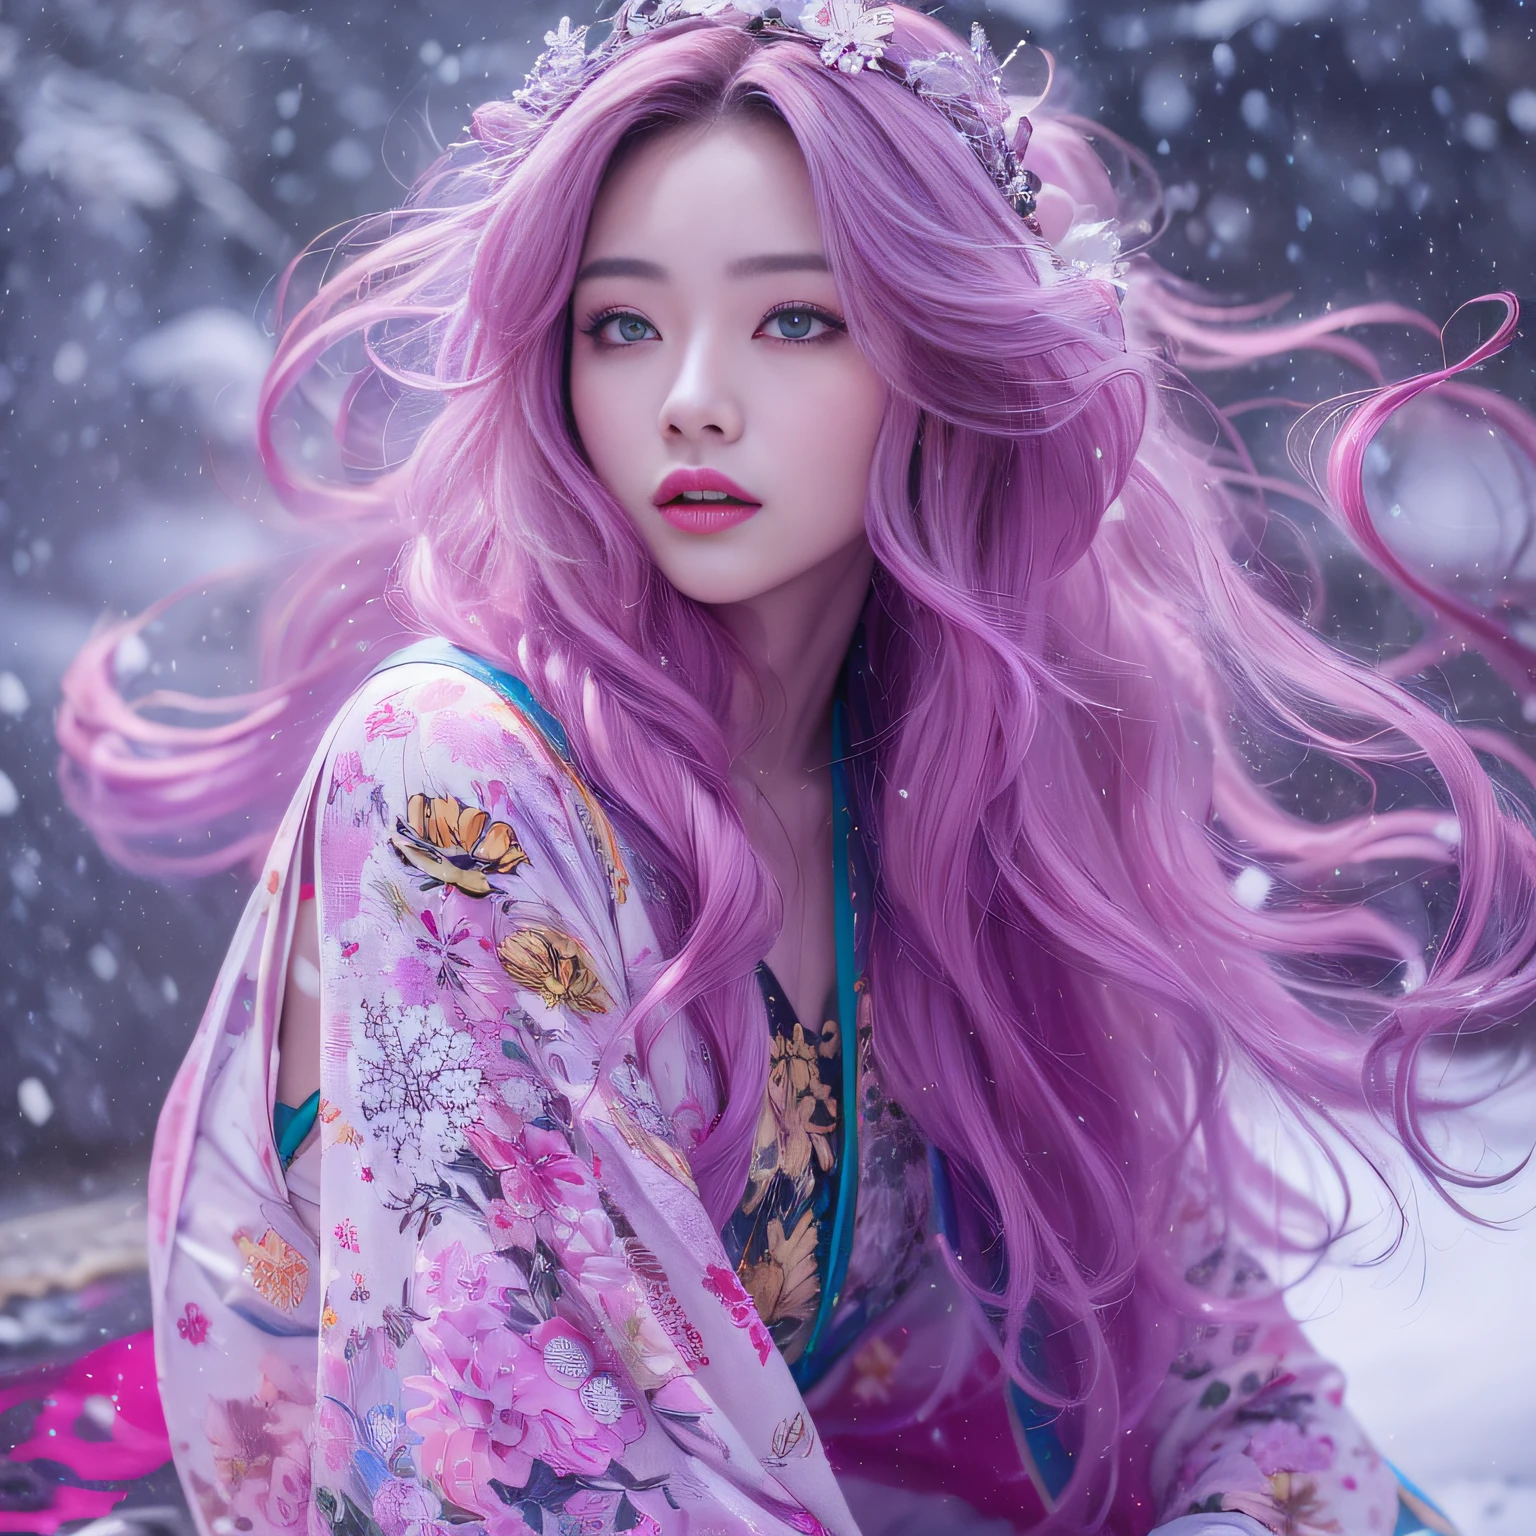 Snow hoop exclusion area 32k（傑作，高畫質，超高畫質，32k）飘逸的紫粉色长发，秋天的池塘，盛开， 一种颜色， 通州人 （眼睛發光的女孩）， （薄絲巾）， 側蹲姿勢， 看着地面， 長白髮， 飄逸的頭髮， 蟒蛇頭飾， 中式長袖服裝， （抽象墨水飞溅：1.2）， 白色背景，蓮花護法（現實地：1.4），紫粉色頭髮，雪花飄舞，背景很純淨， 高解析度， 细节， RAW 照片， 夏普再保险， 尼康 D850 膠卷照片由 Jefferies Lee 拍攝 4 柯達 Portra 400 相機 F1.6 枪, 丰富的色彩, 超逼真生動的紋理, 戲劇性的燈光, 虛幻引擎藝術站趨勢, 西奈斯特800，飘逸的紫粉色长发